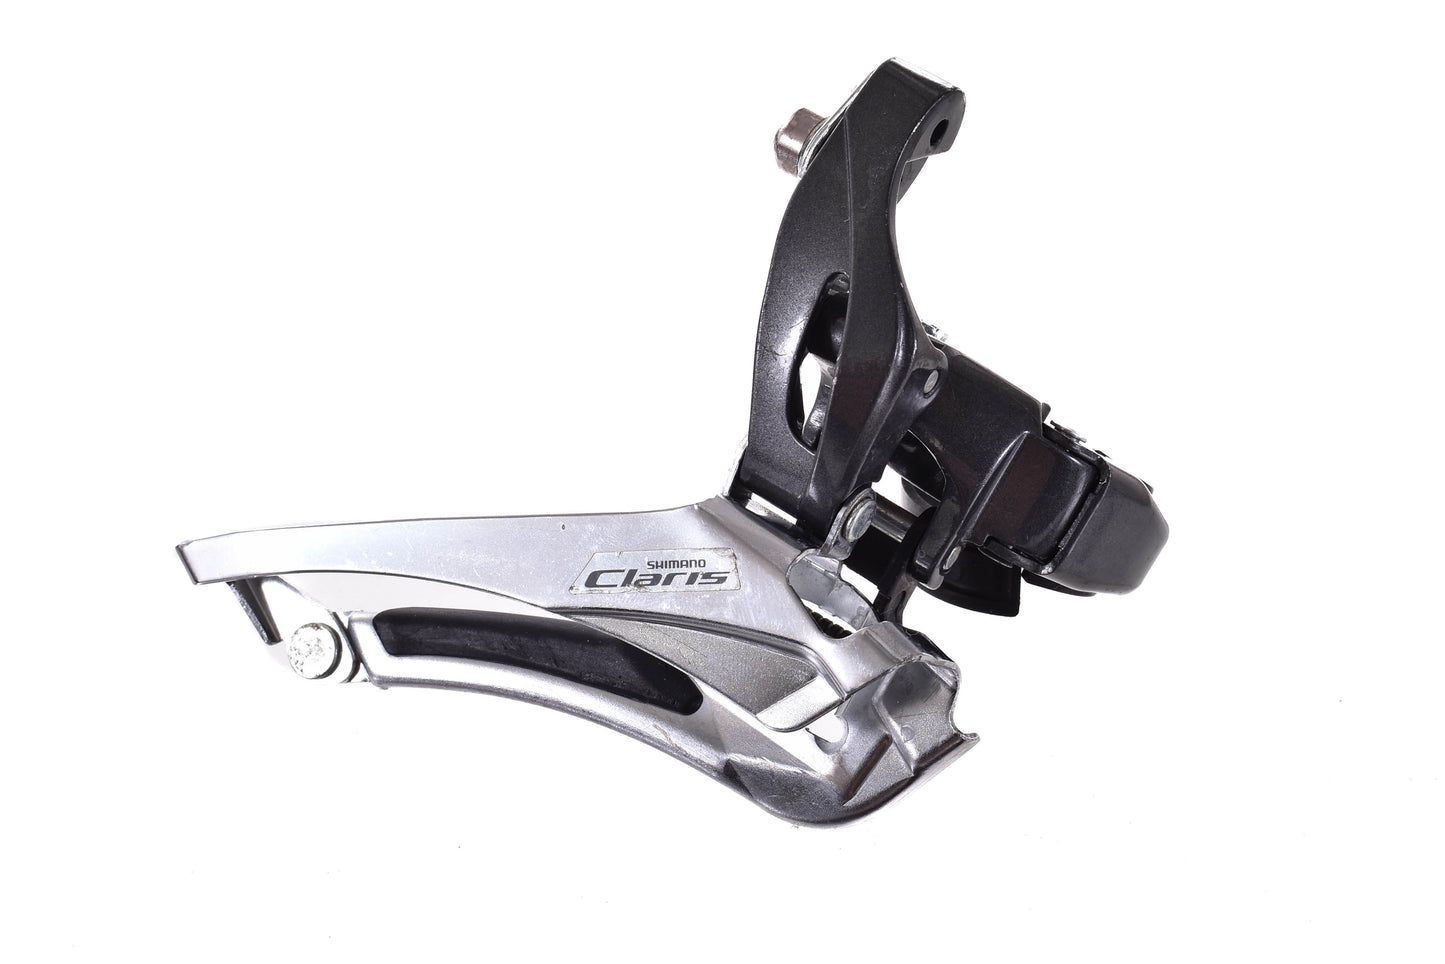 USED Shimano Claris 2x8 speed Drop Bar Road Groupset w/ Tiagra 172.5mm 50/34 Crankset